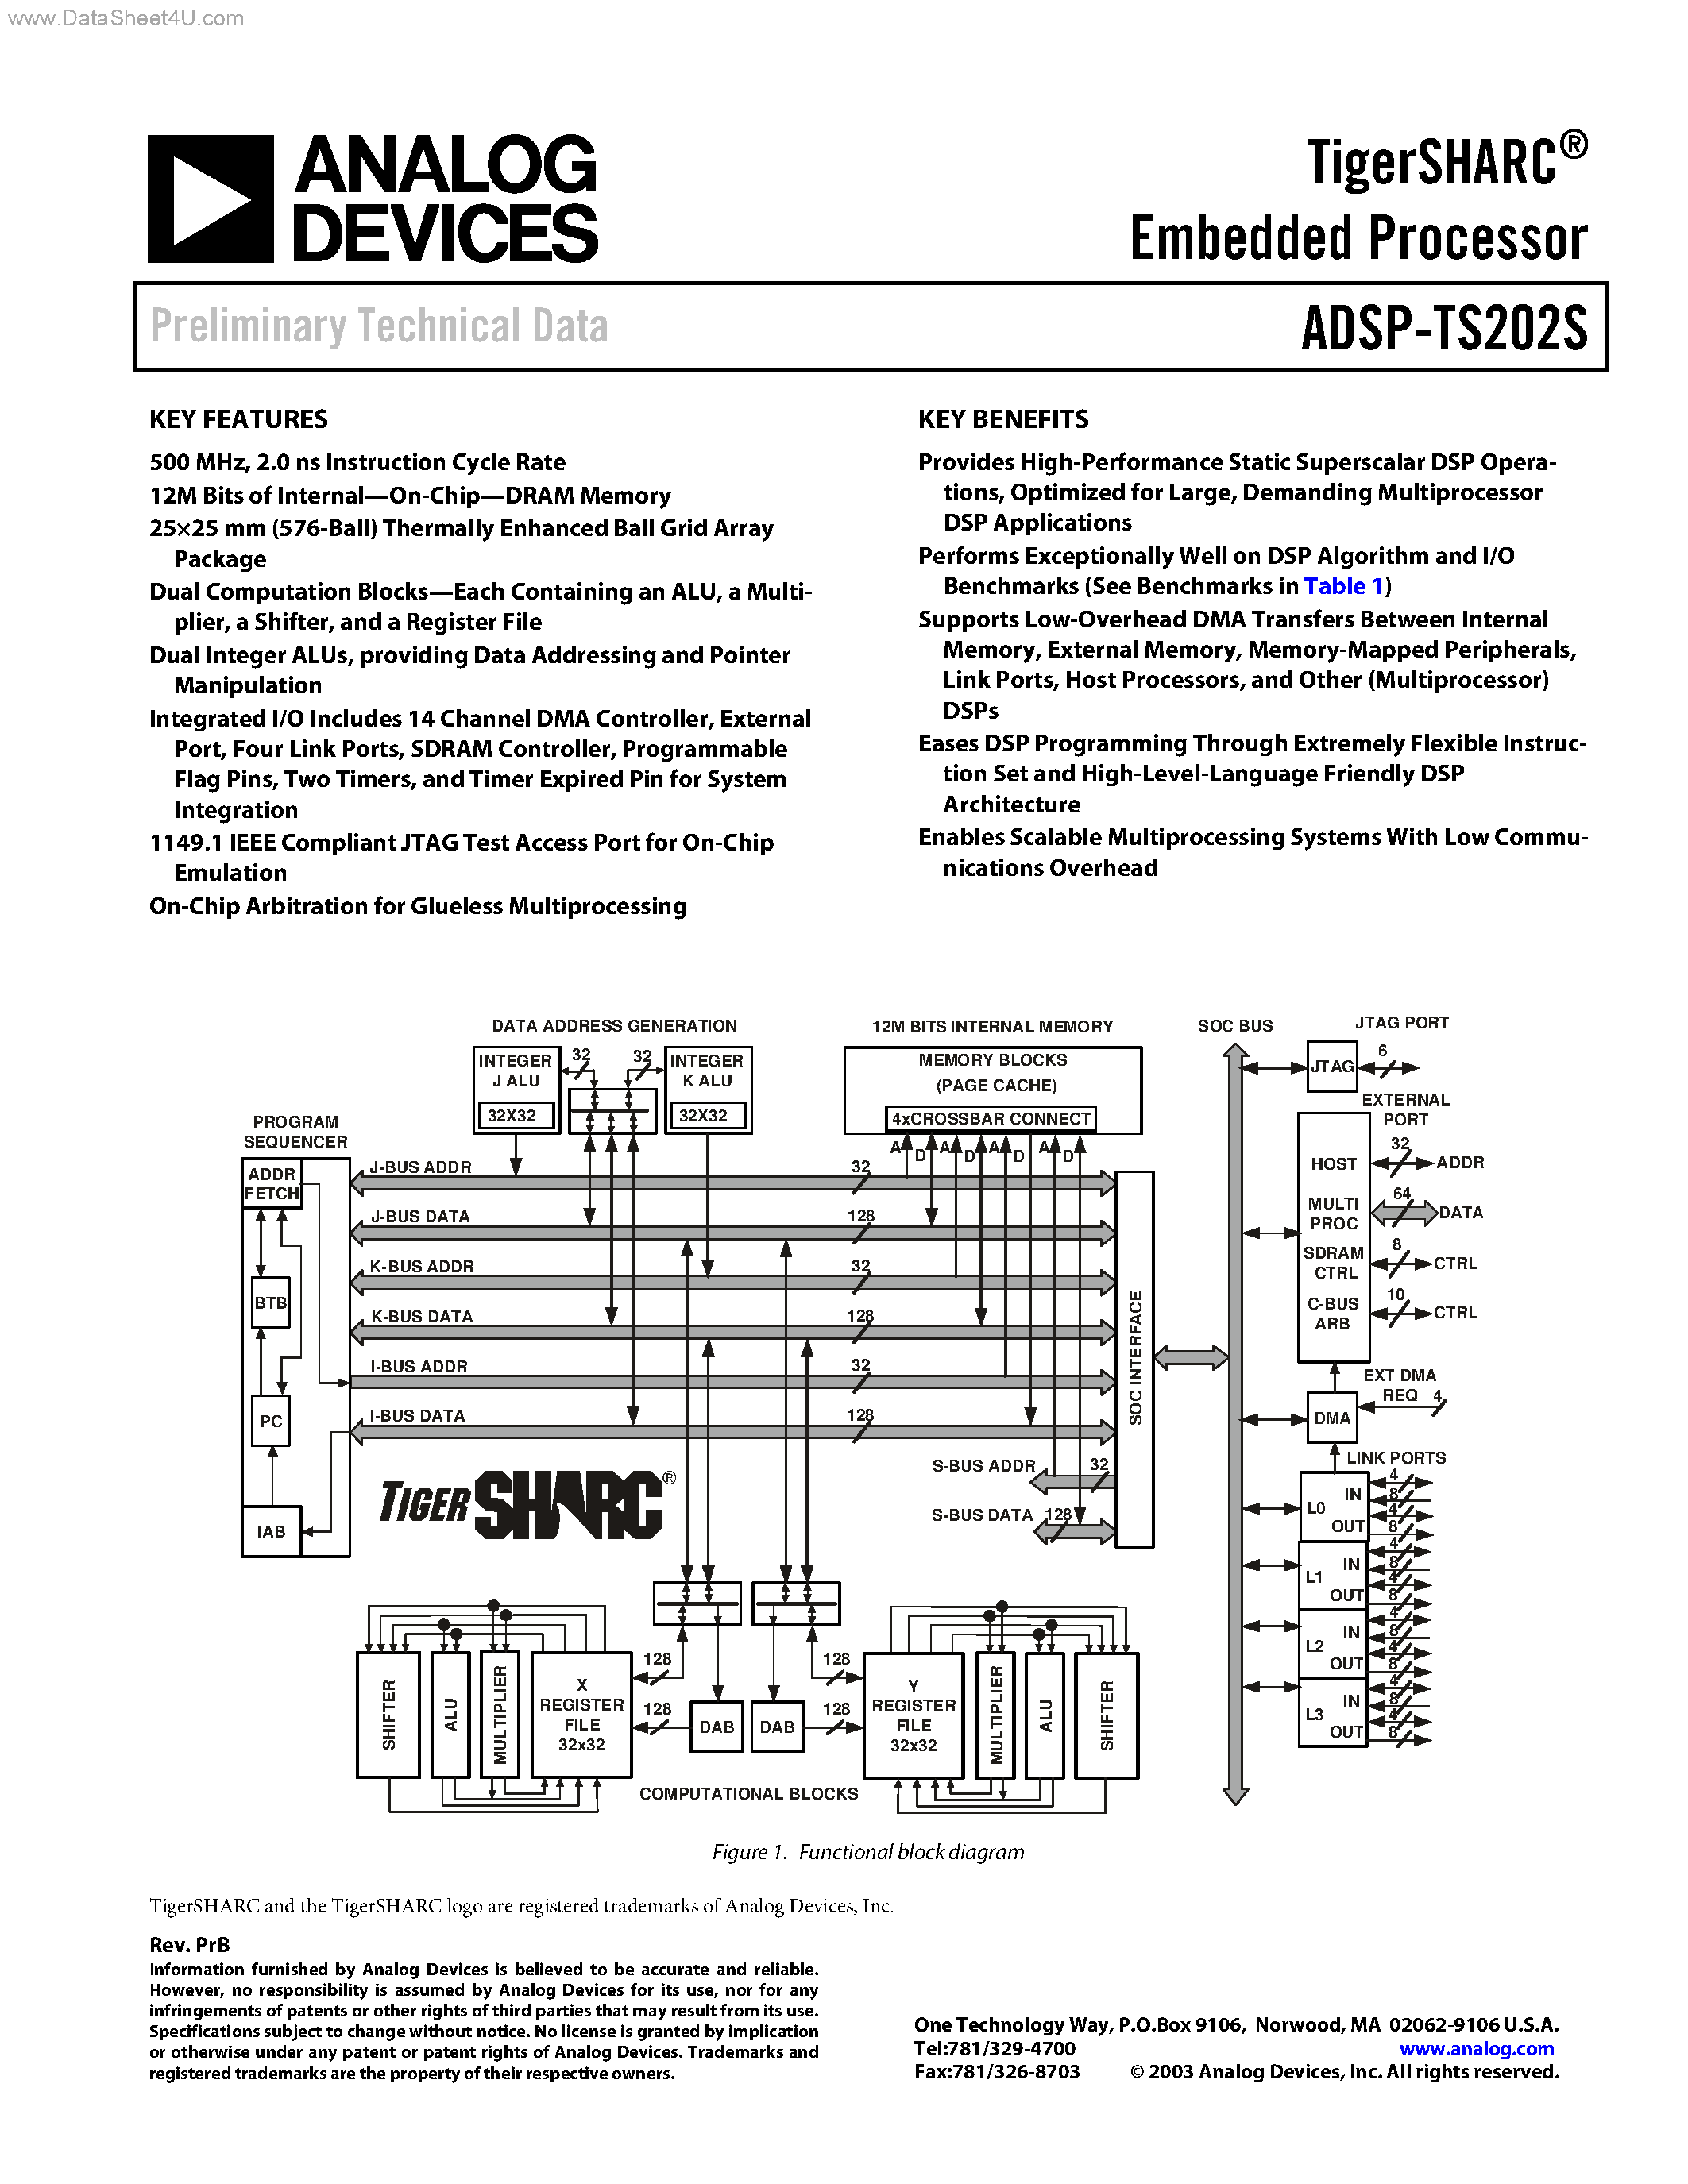 Datasheet ADSP-TS202S - TigerSHARC Embedded Processor page 1